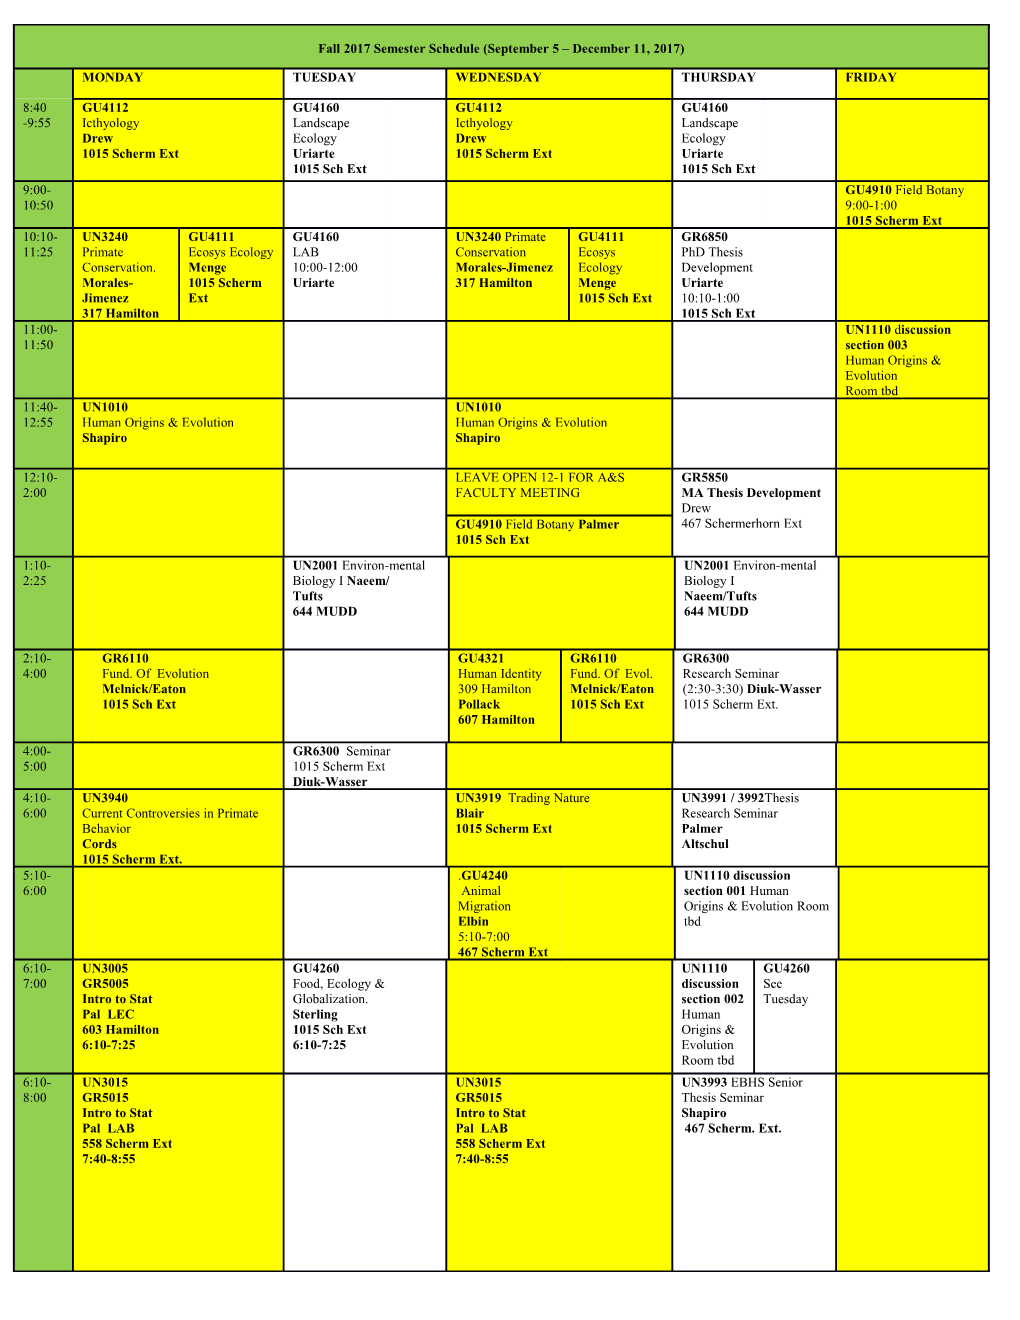 Spring 2012 Semester Schedule